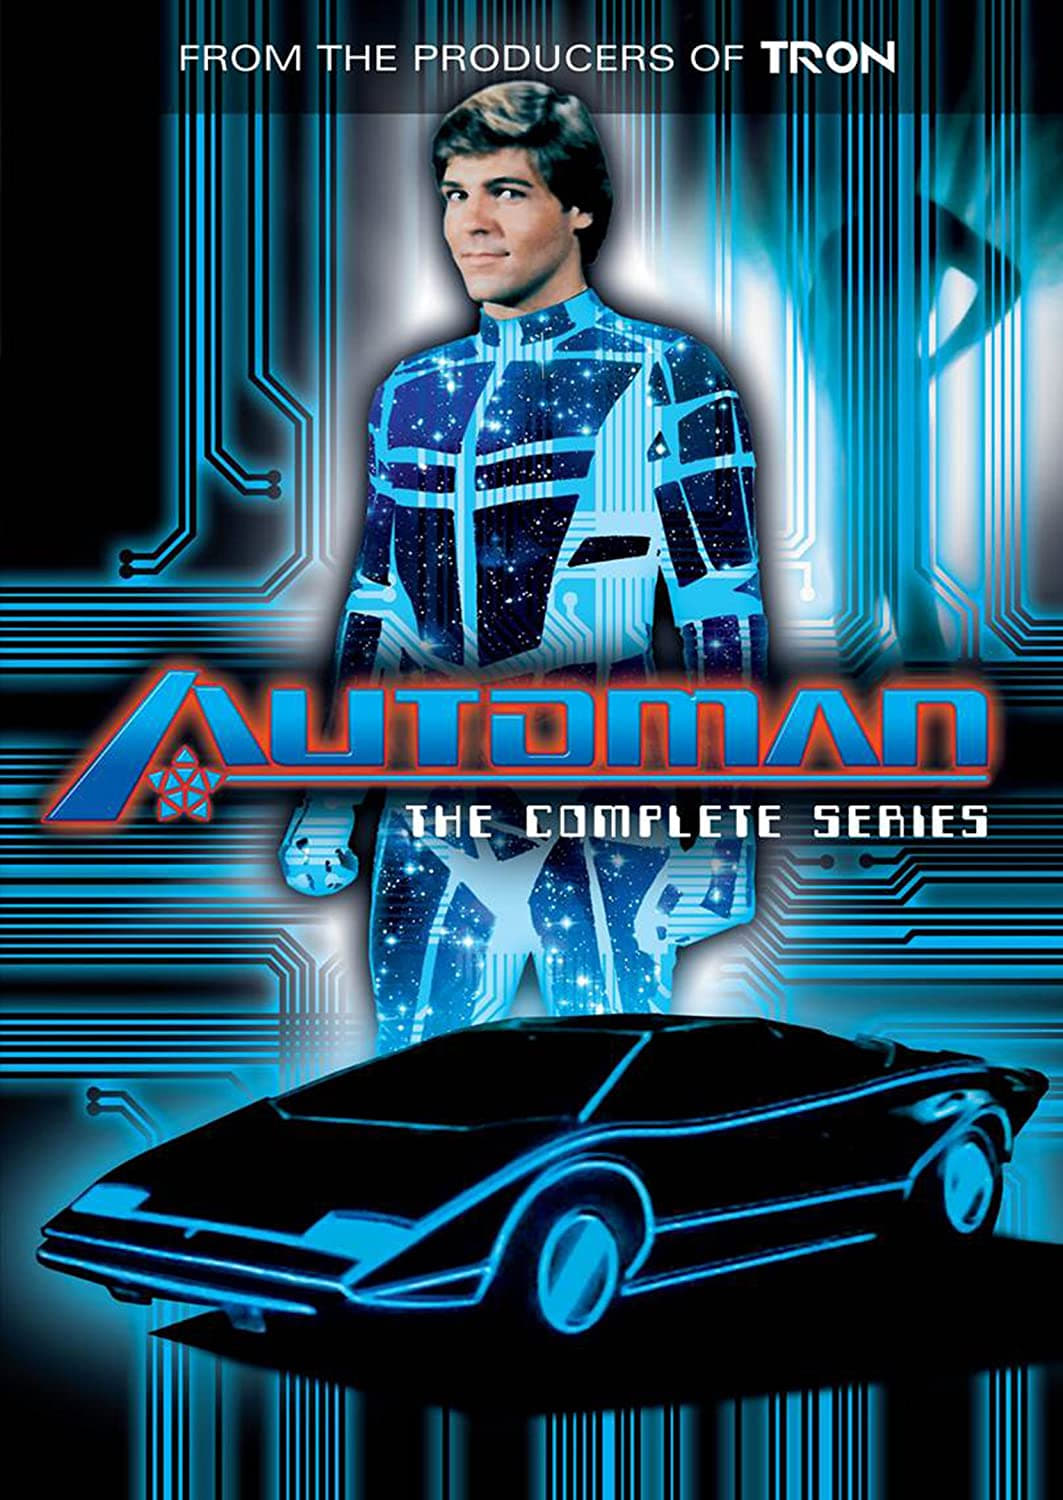 Automan (1983)